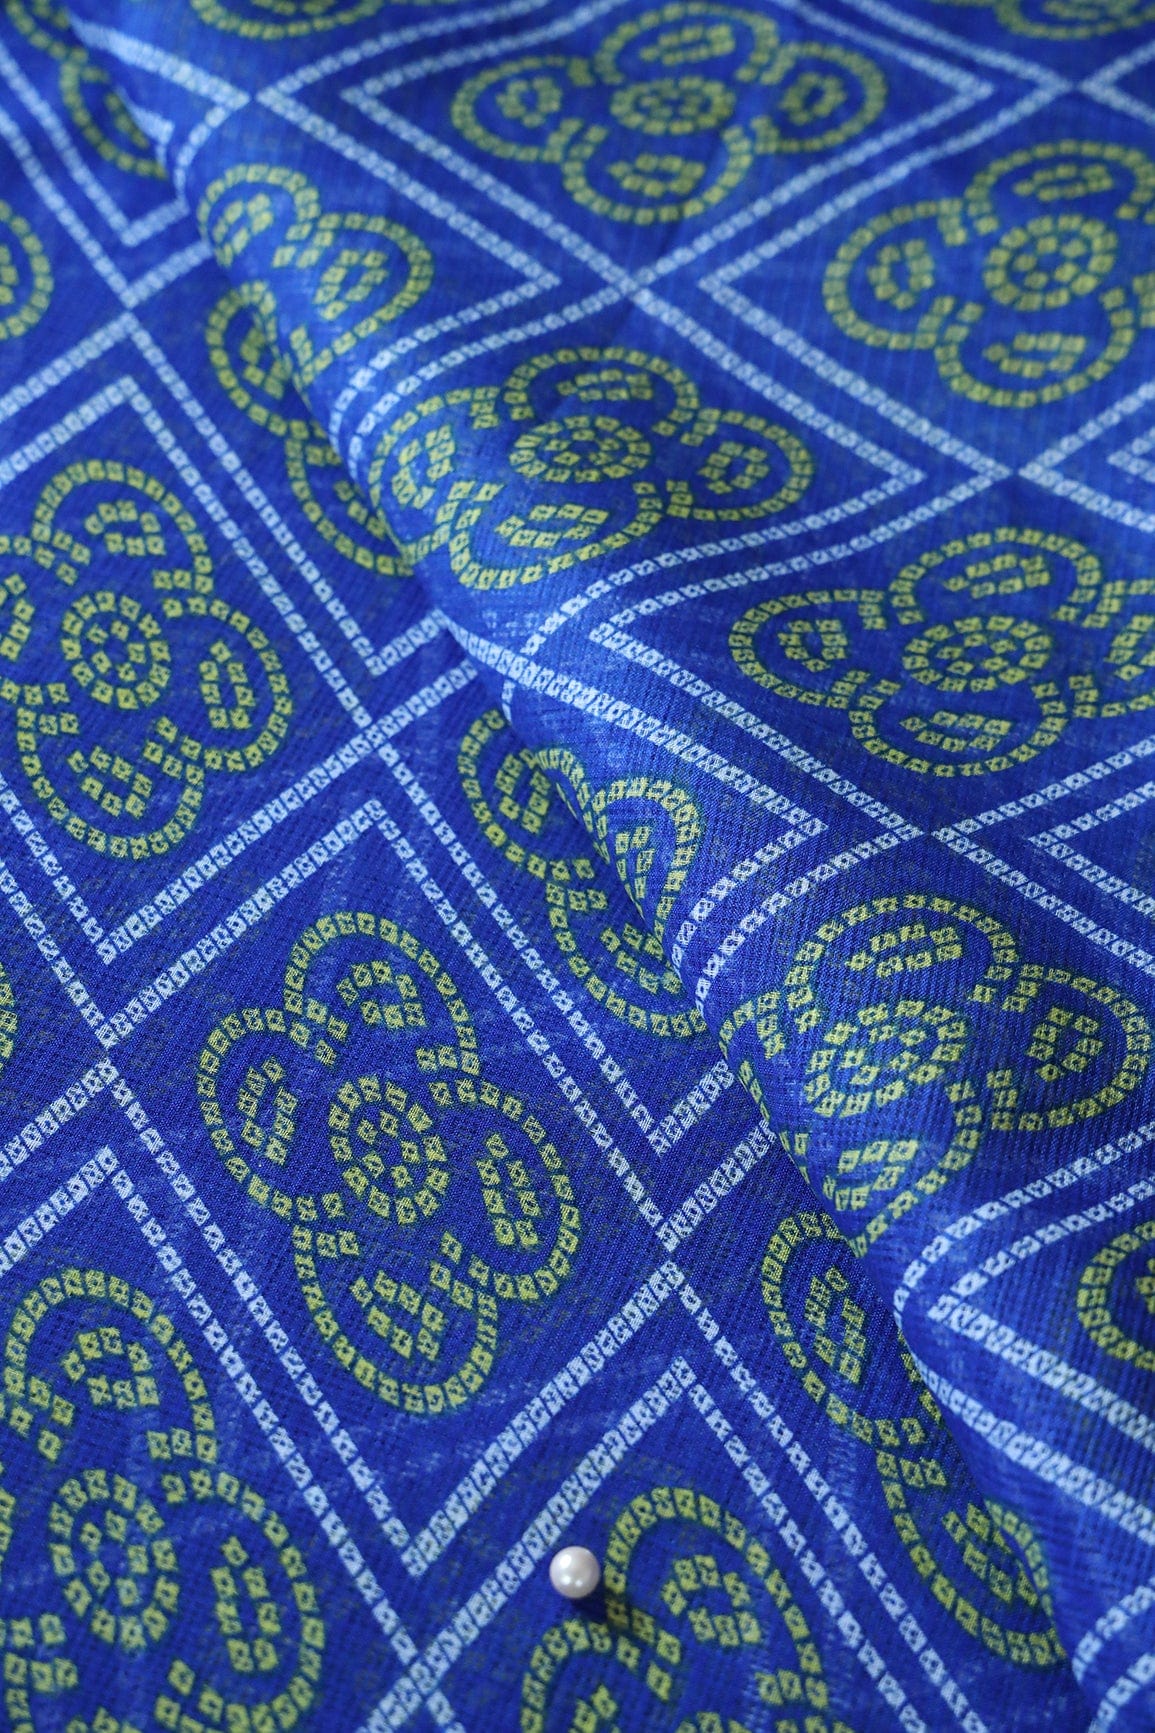 doeraa Prints White And Yellow Bandhani Print On Royal Blue Kota Doria Fabric